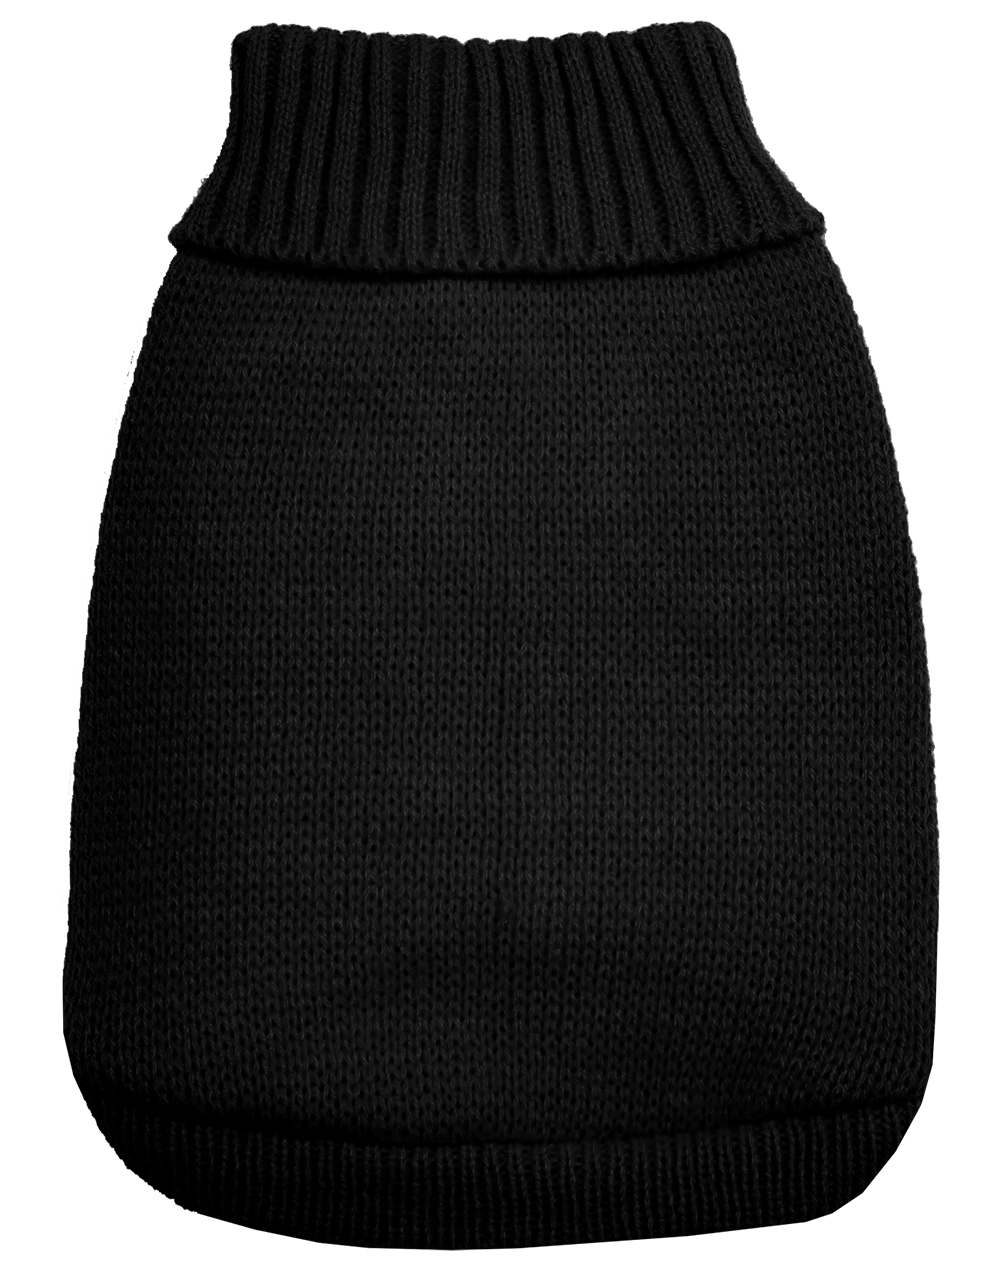 Knit Pet Sweater Black Size XS